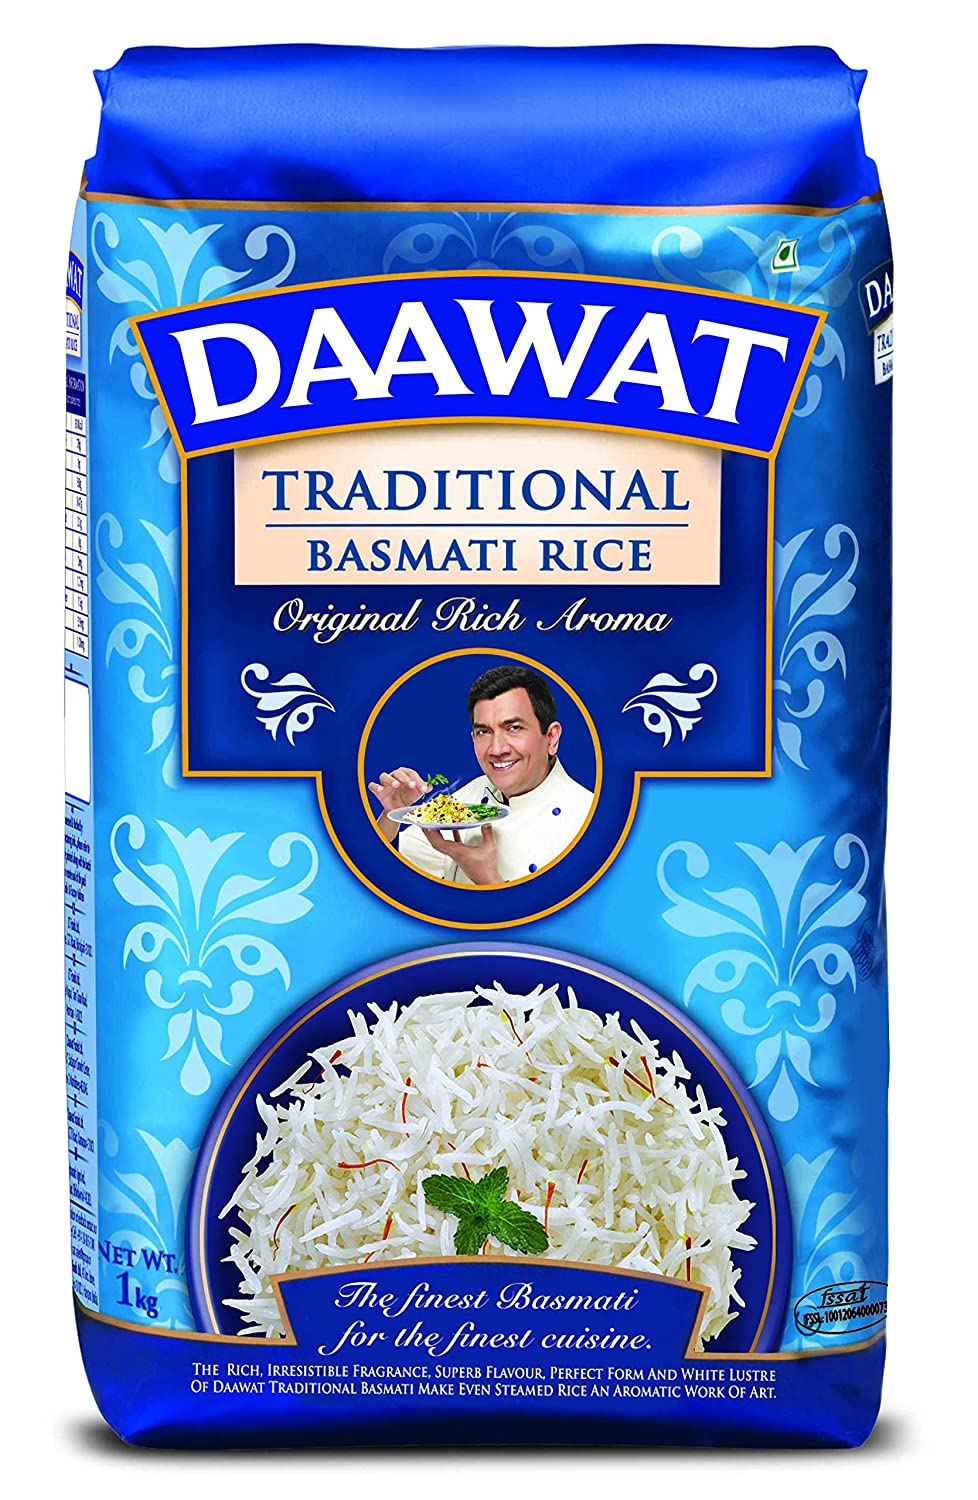 TRADITIONAL Basmati Rice, Original Rich Aroma, Daawat (ТРАДИЦИОННЫЙ басмати рис, Оригинальный насыщенный аромат, Даават), 1 кг.